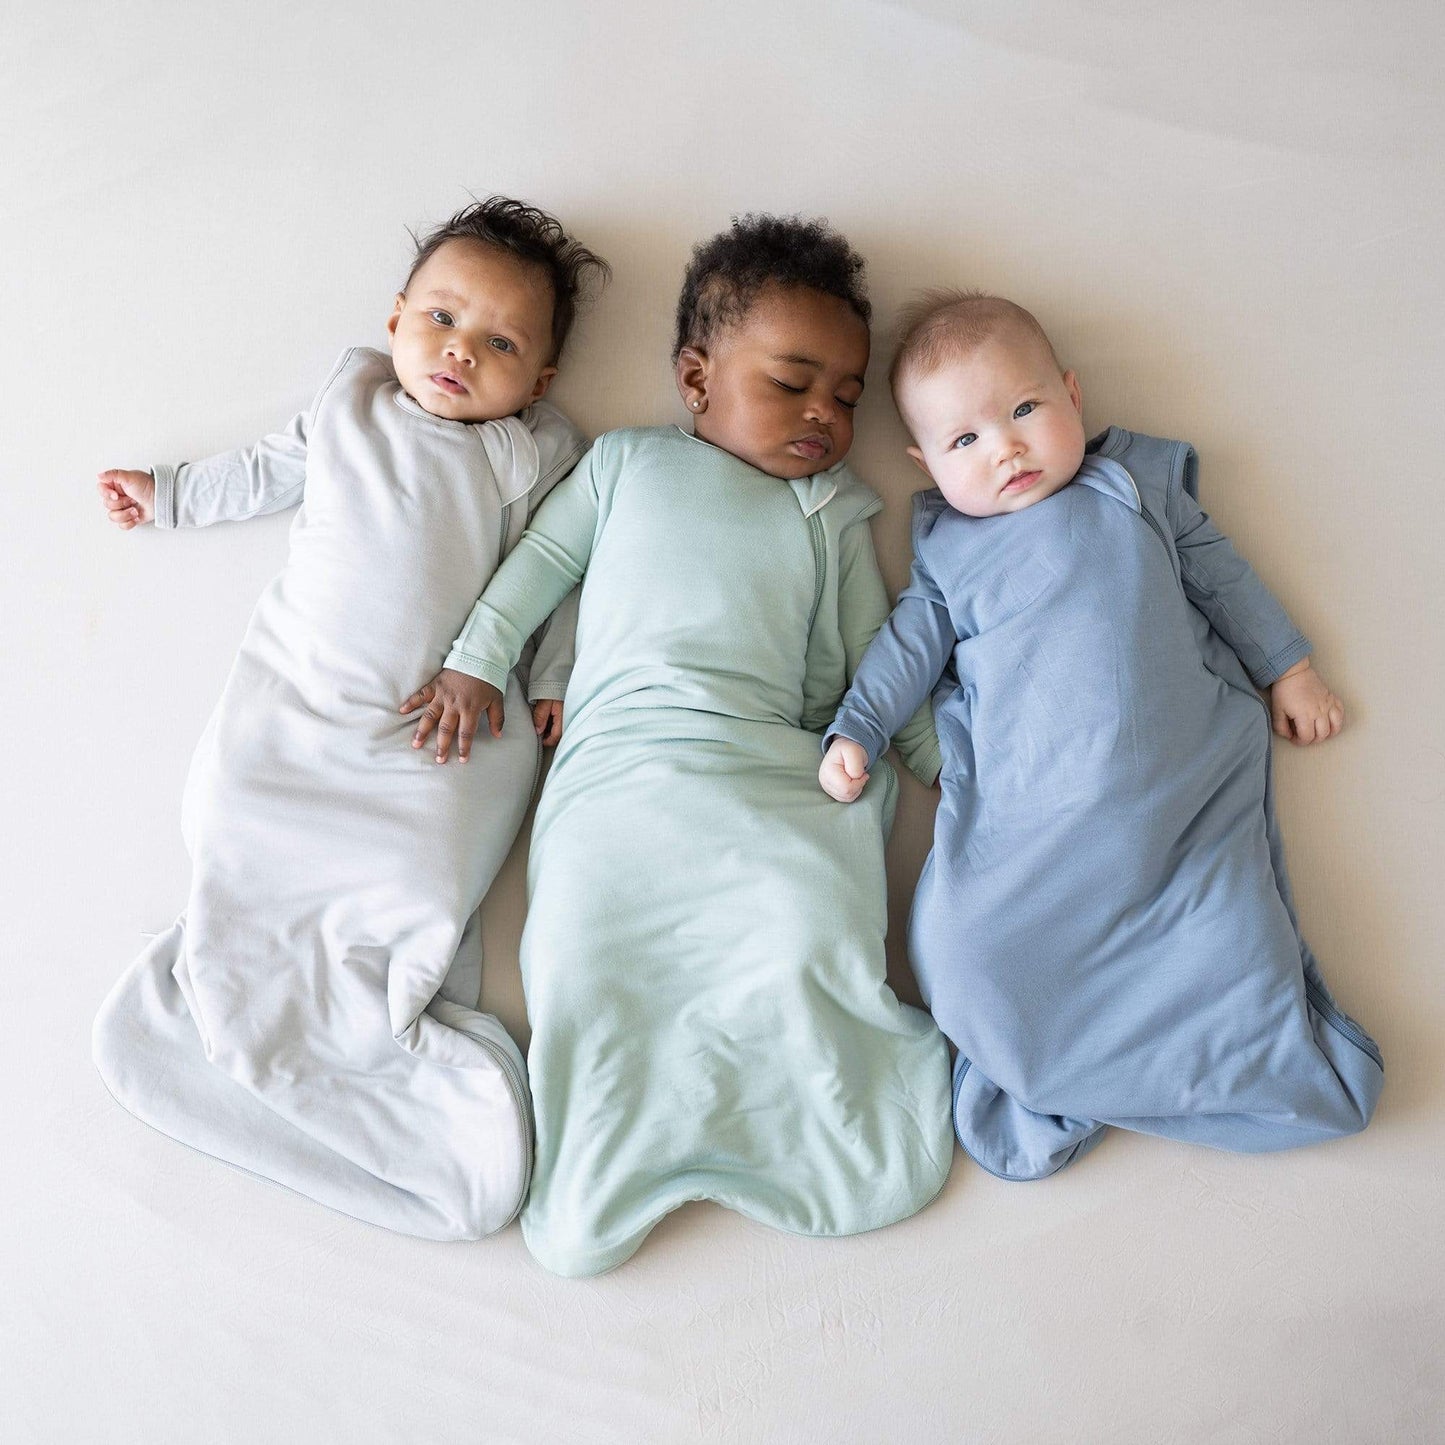 Babies wearing Kyte Baby Sleep Bags